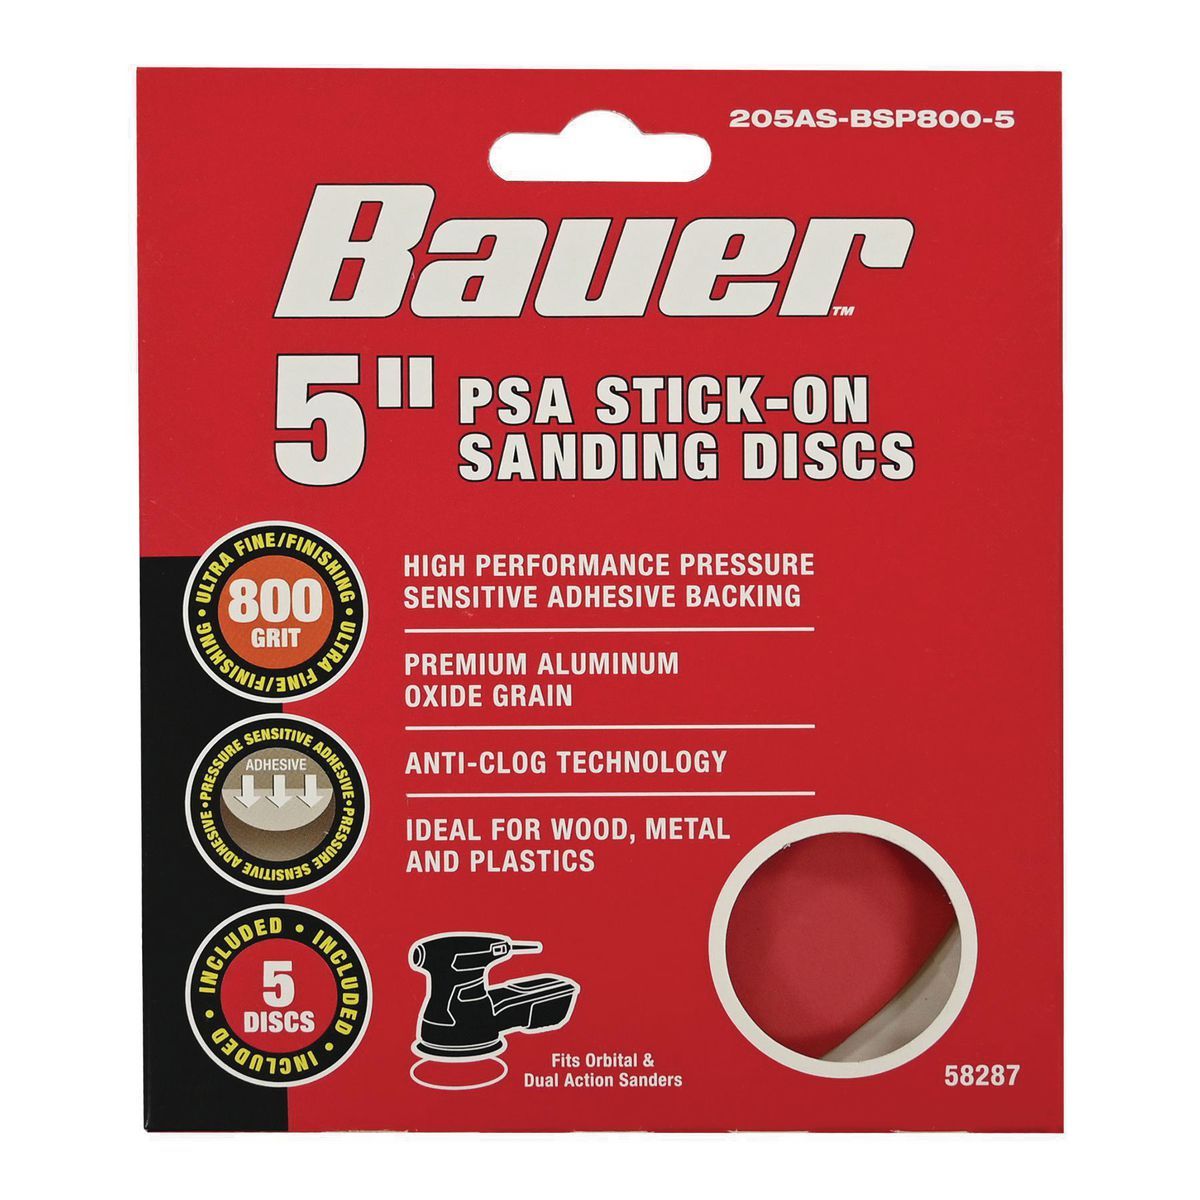 BAUER 5 in. , 800 Grit PSA Sanding Discs with Aluminum Oxide Grain, 5 Pack